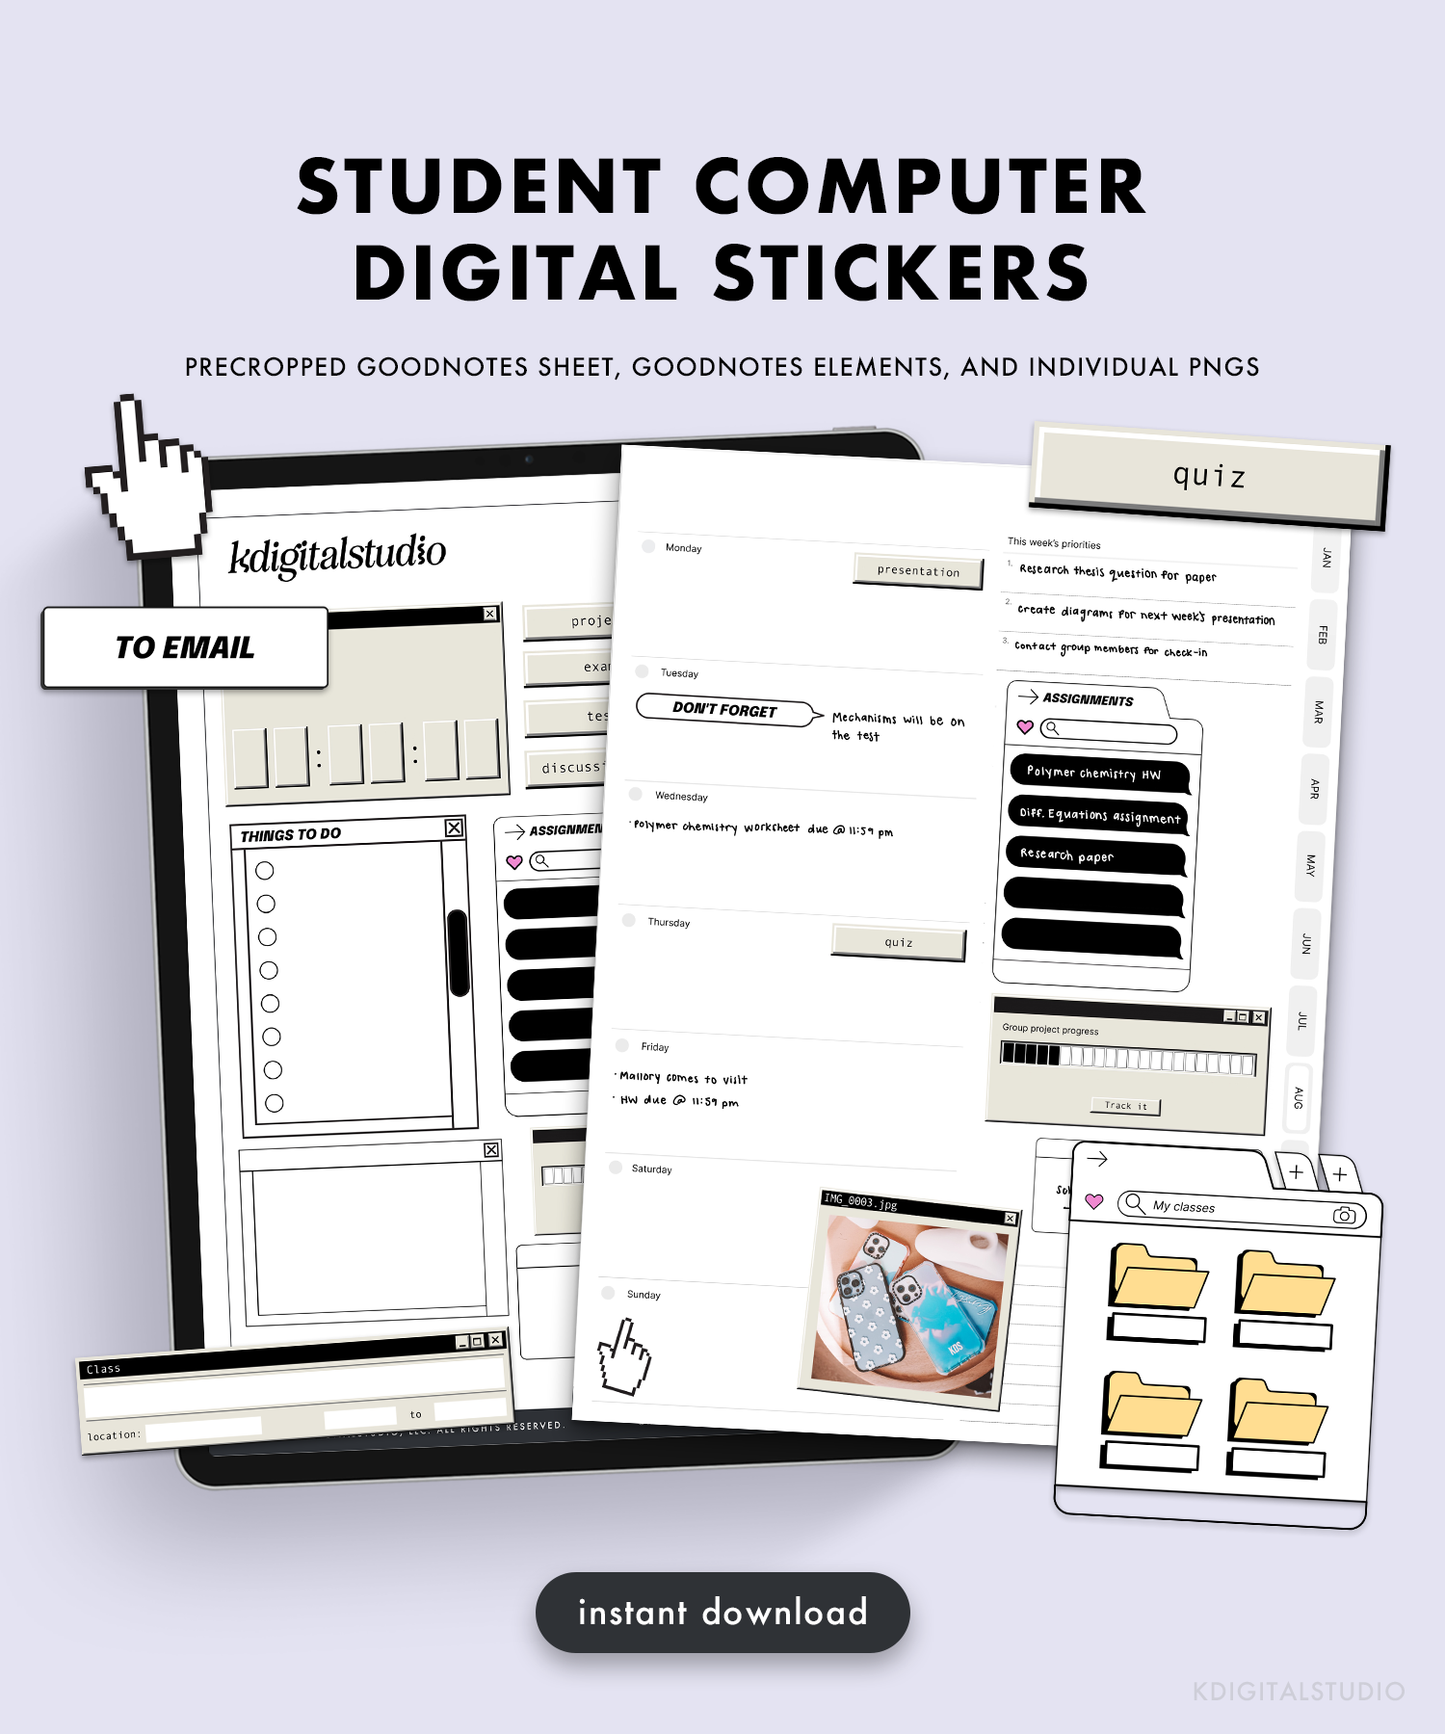 Pegatinas digitales para computadora de estudiante